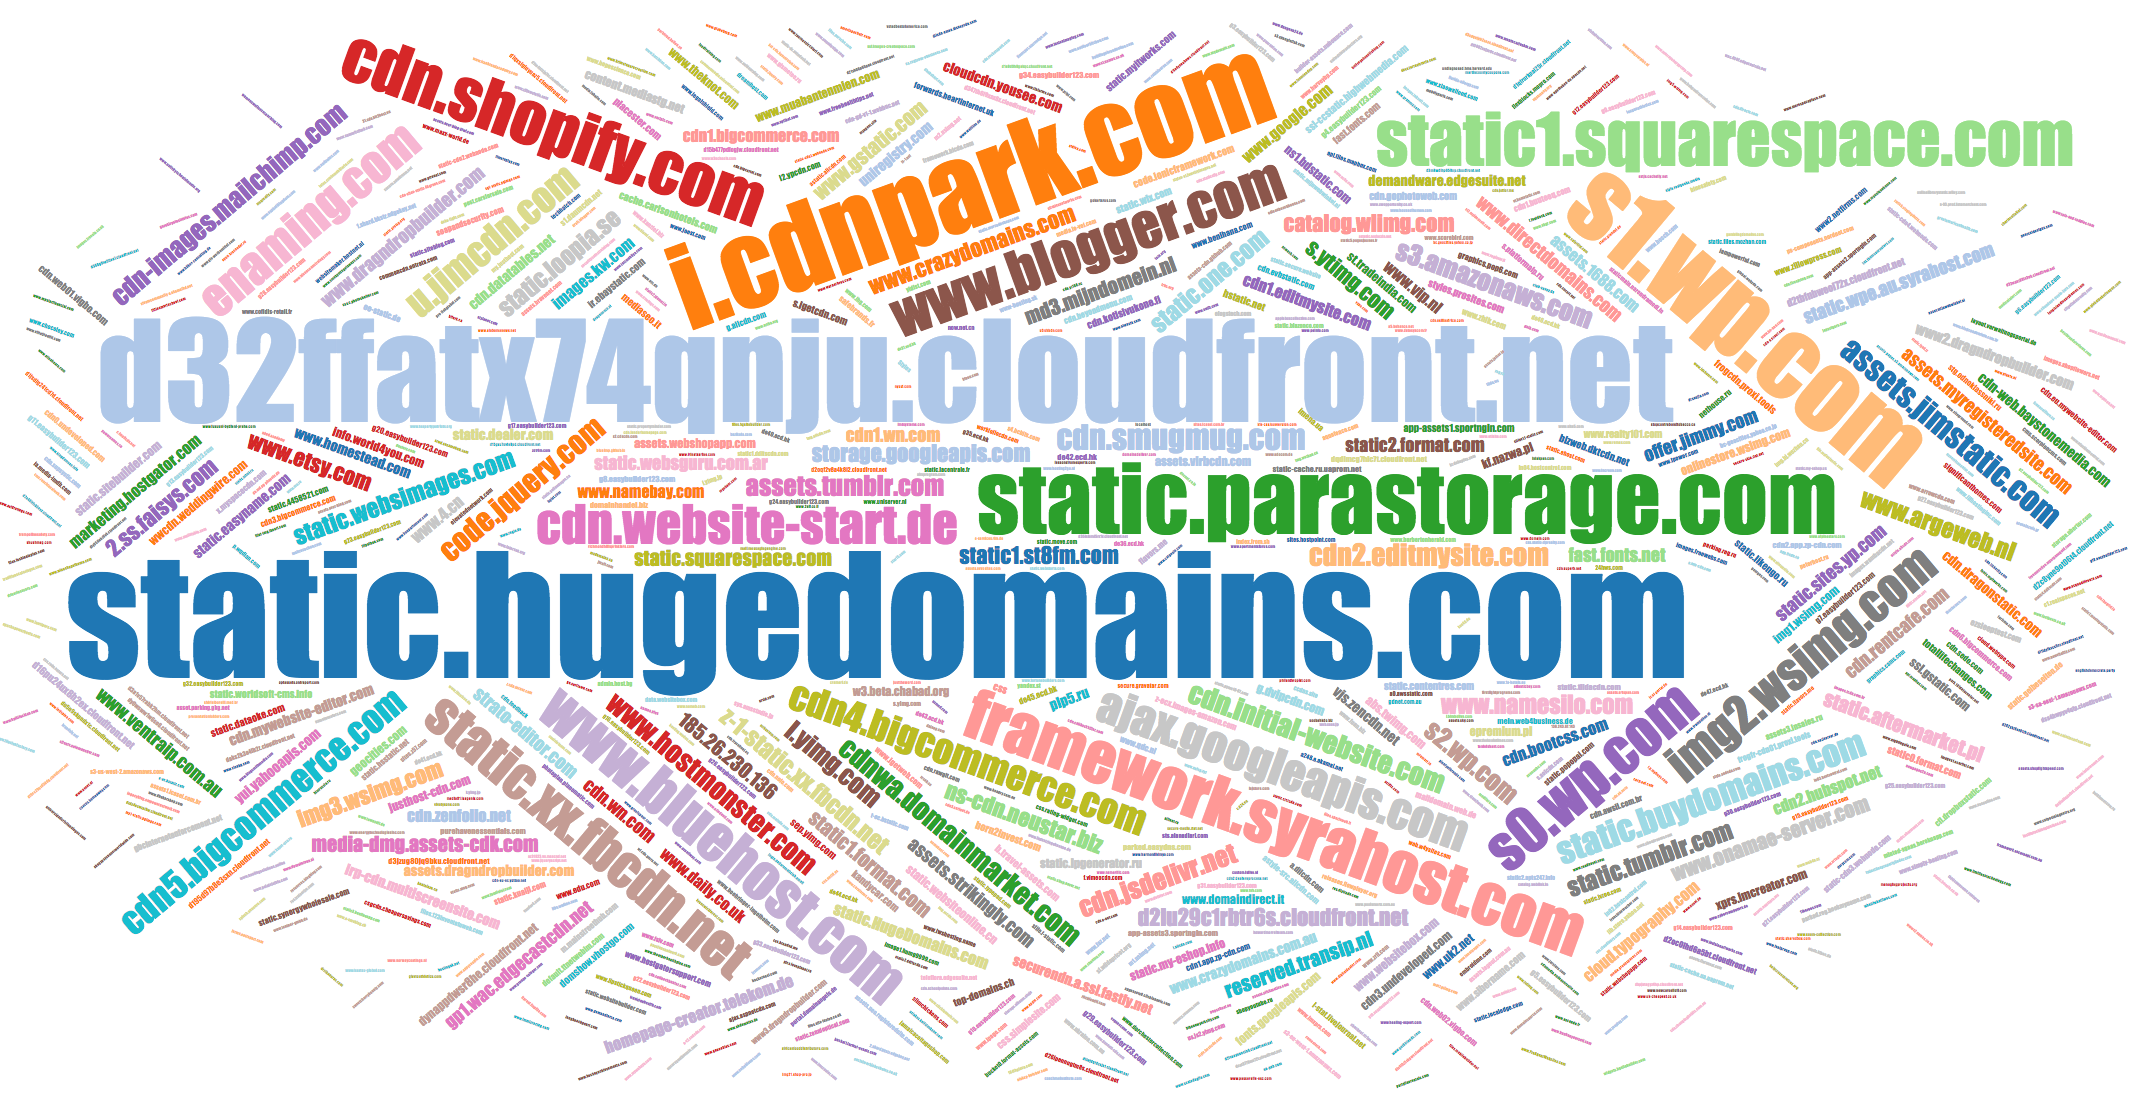 Popular names of CSS domains oe-static.de, onlinestore.wsimg.com, etc.